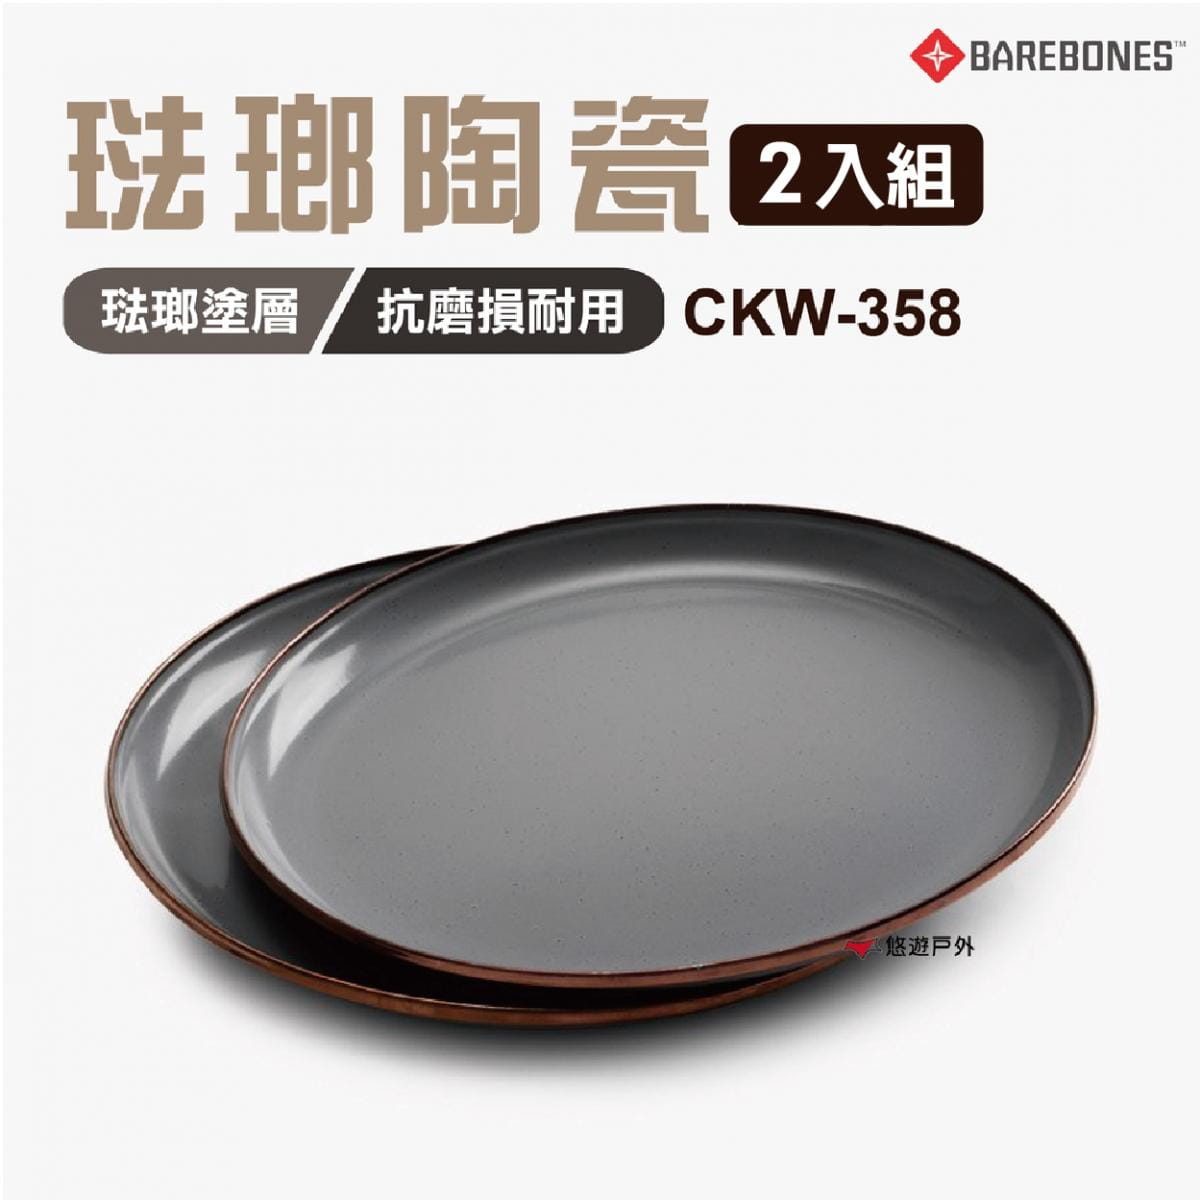 【Barebones】珐瑯陶瓷盤組 CKW-358 (悠遊戶外) 0